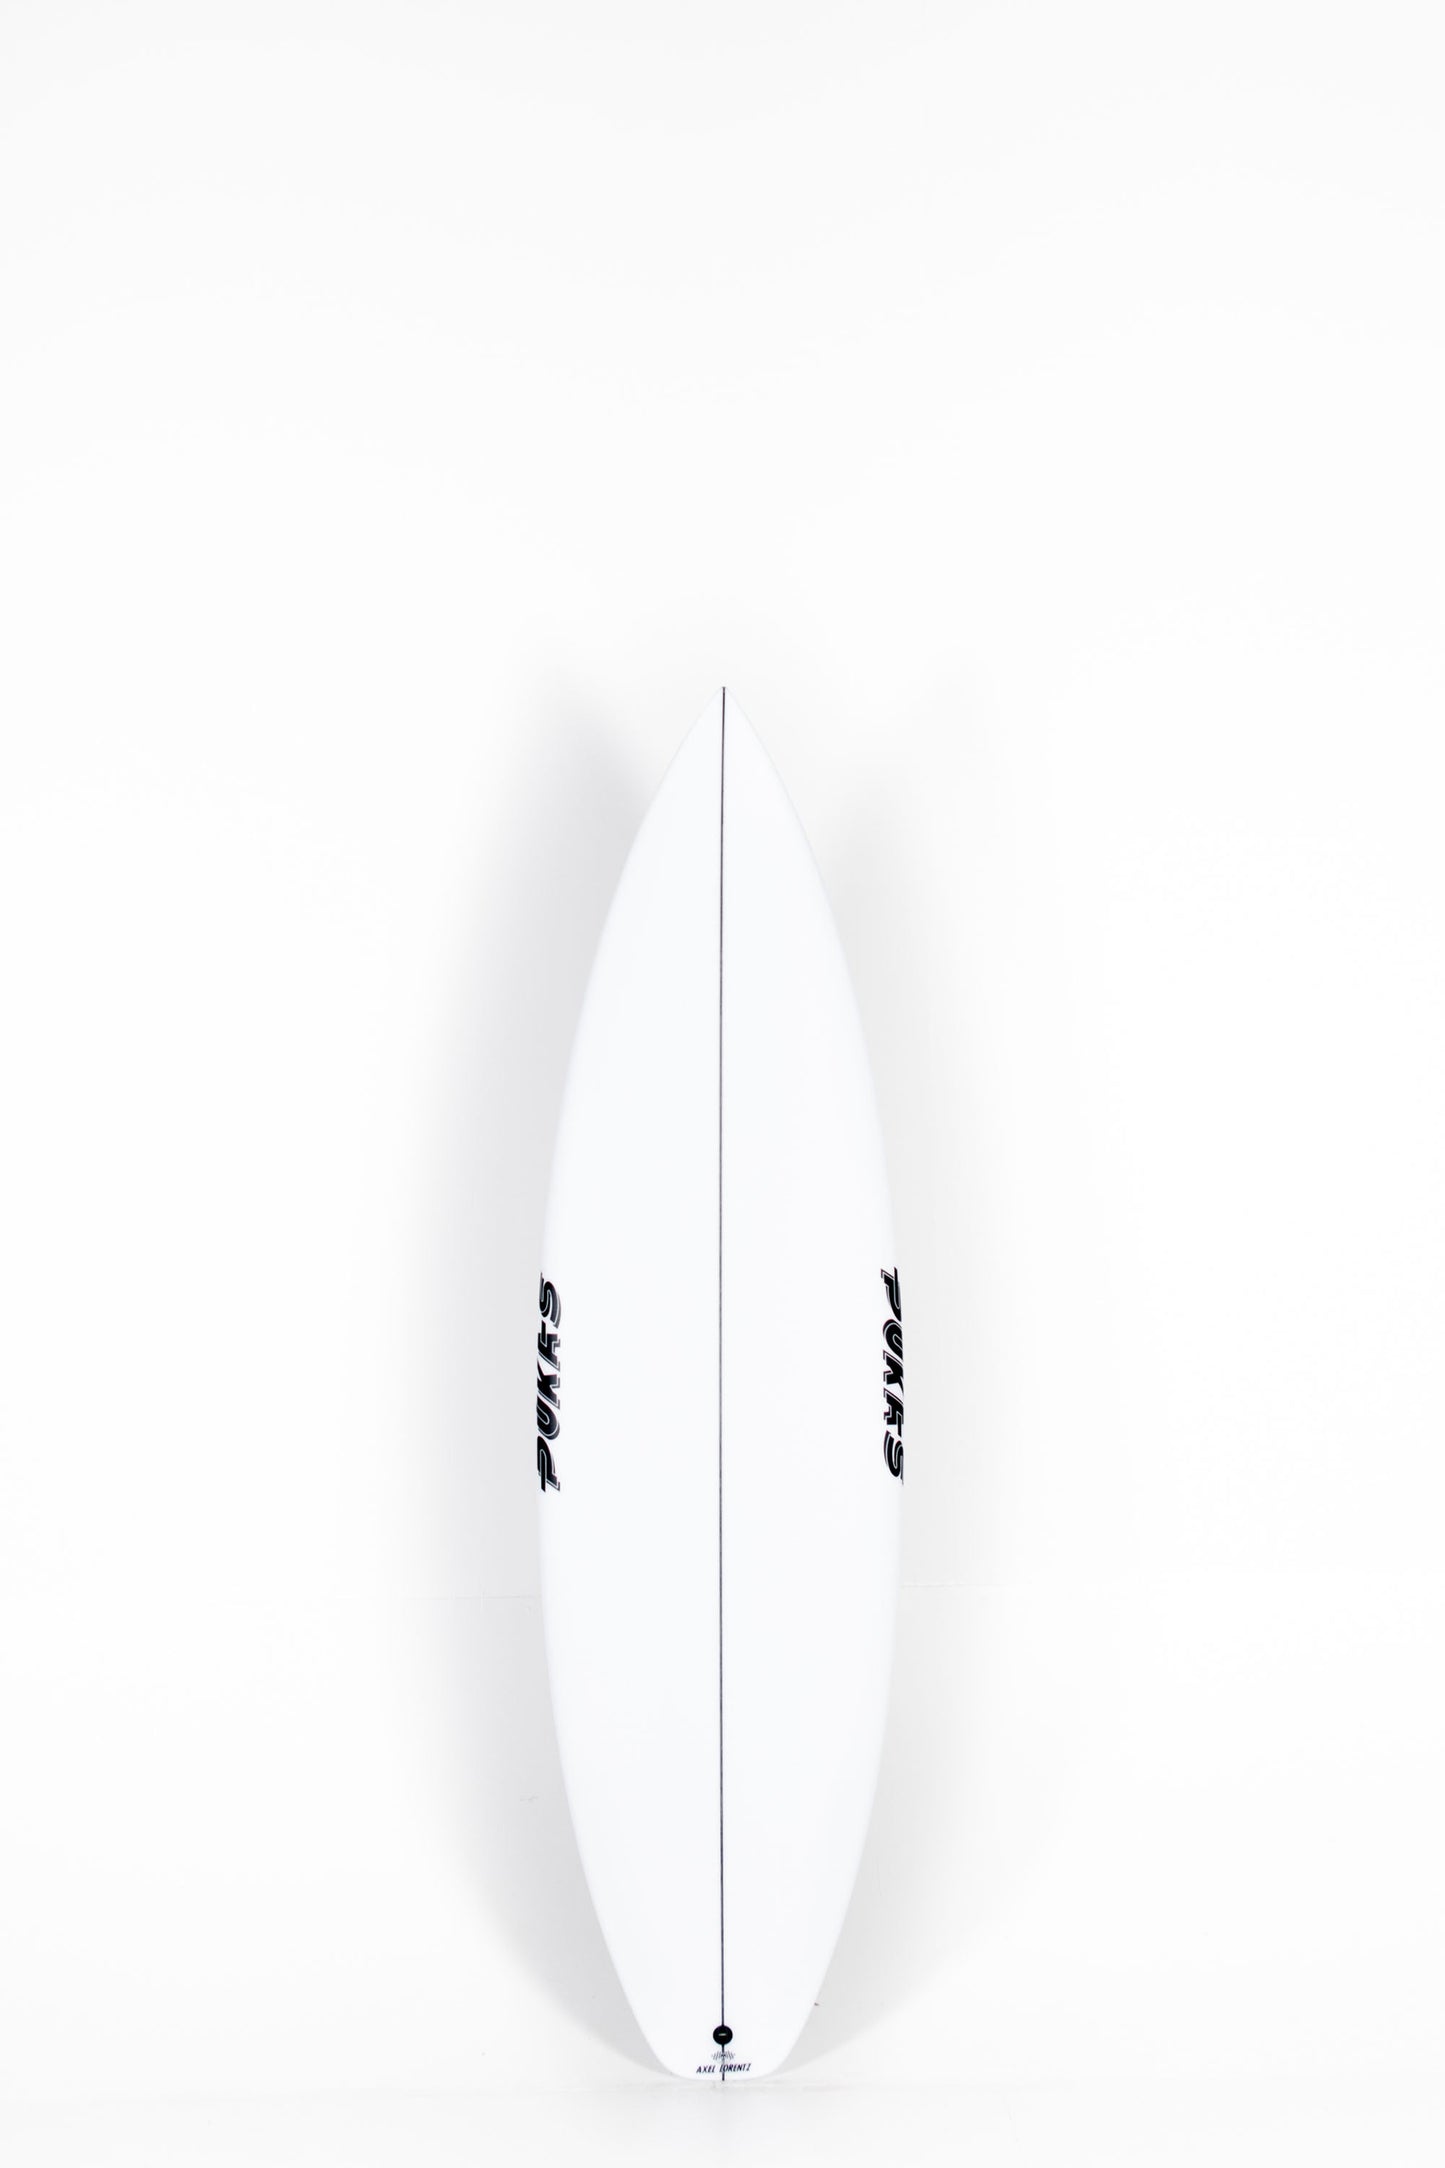 Pukas Surf Shop - Pukas Surfboard - DARK by Axel Lorentz - 6’1” x 19,63 x 2,4 - 30,67L - AX06153